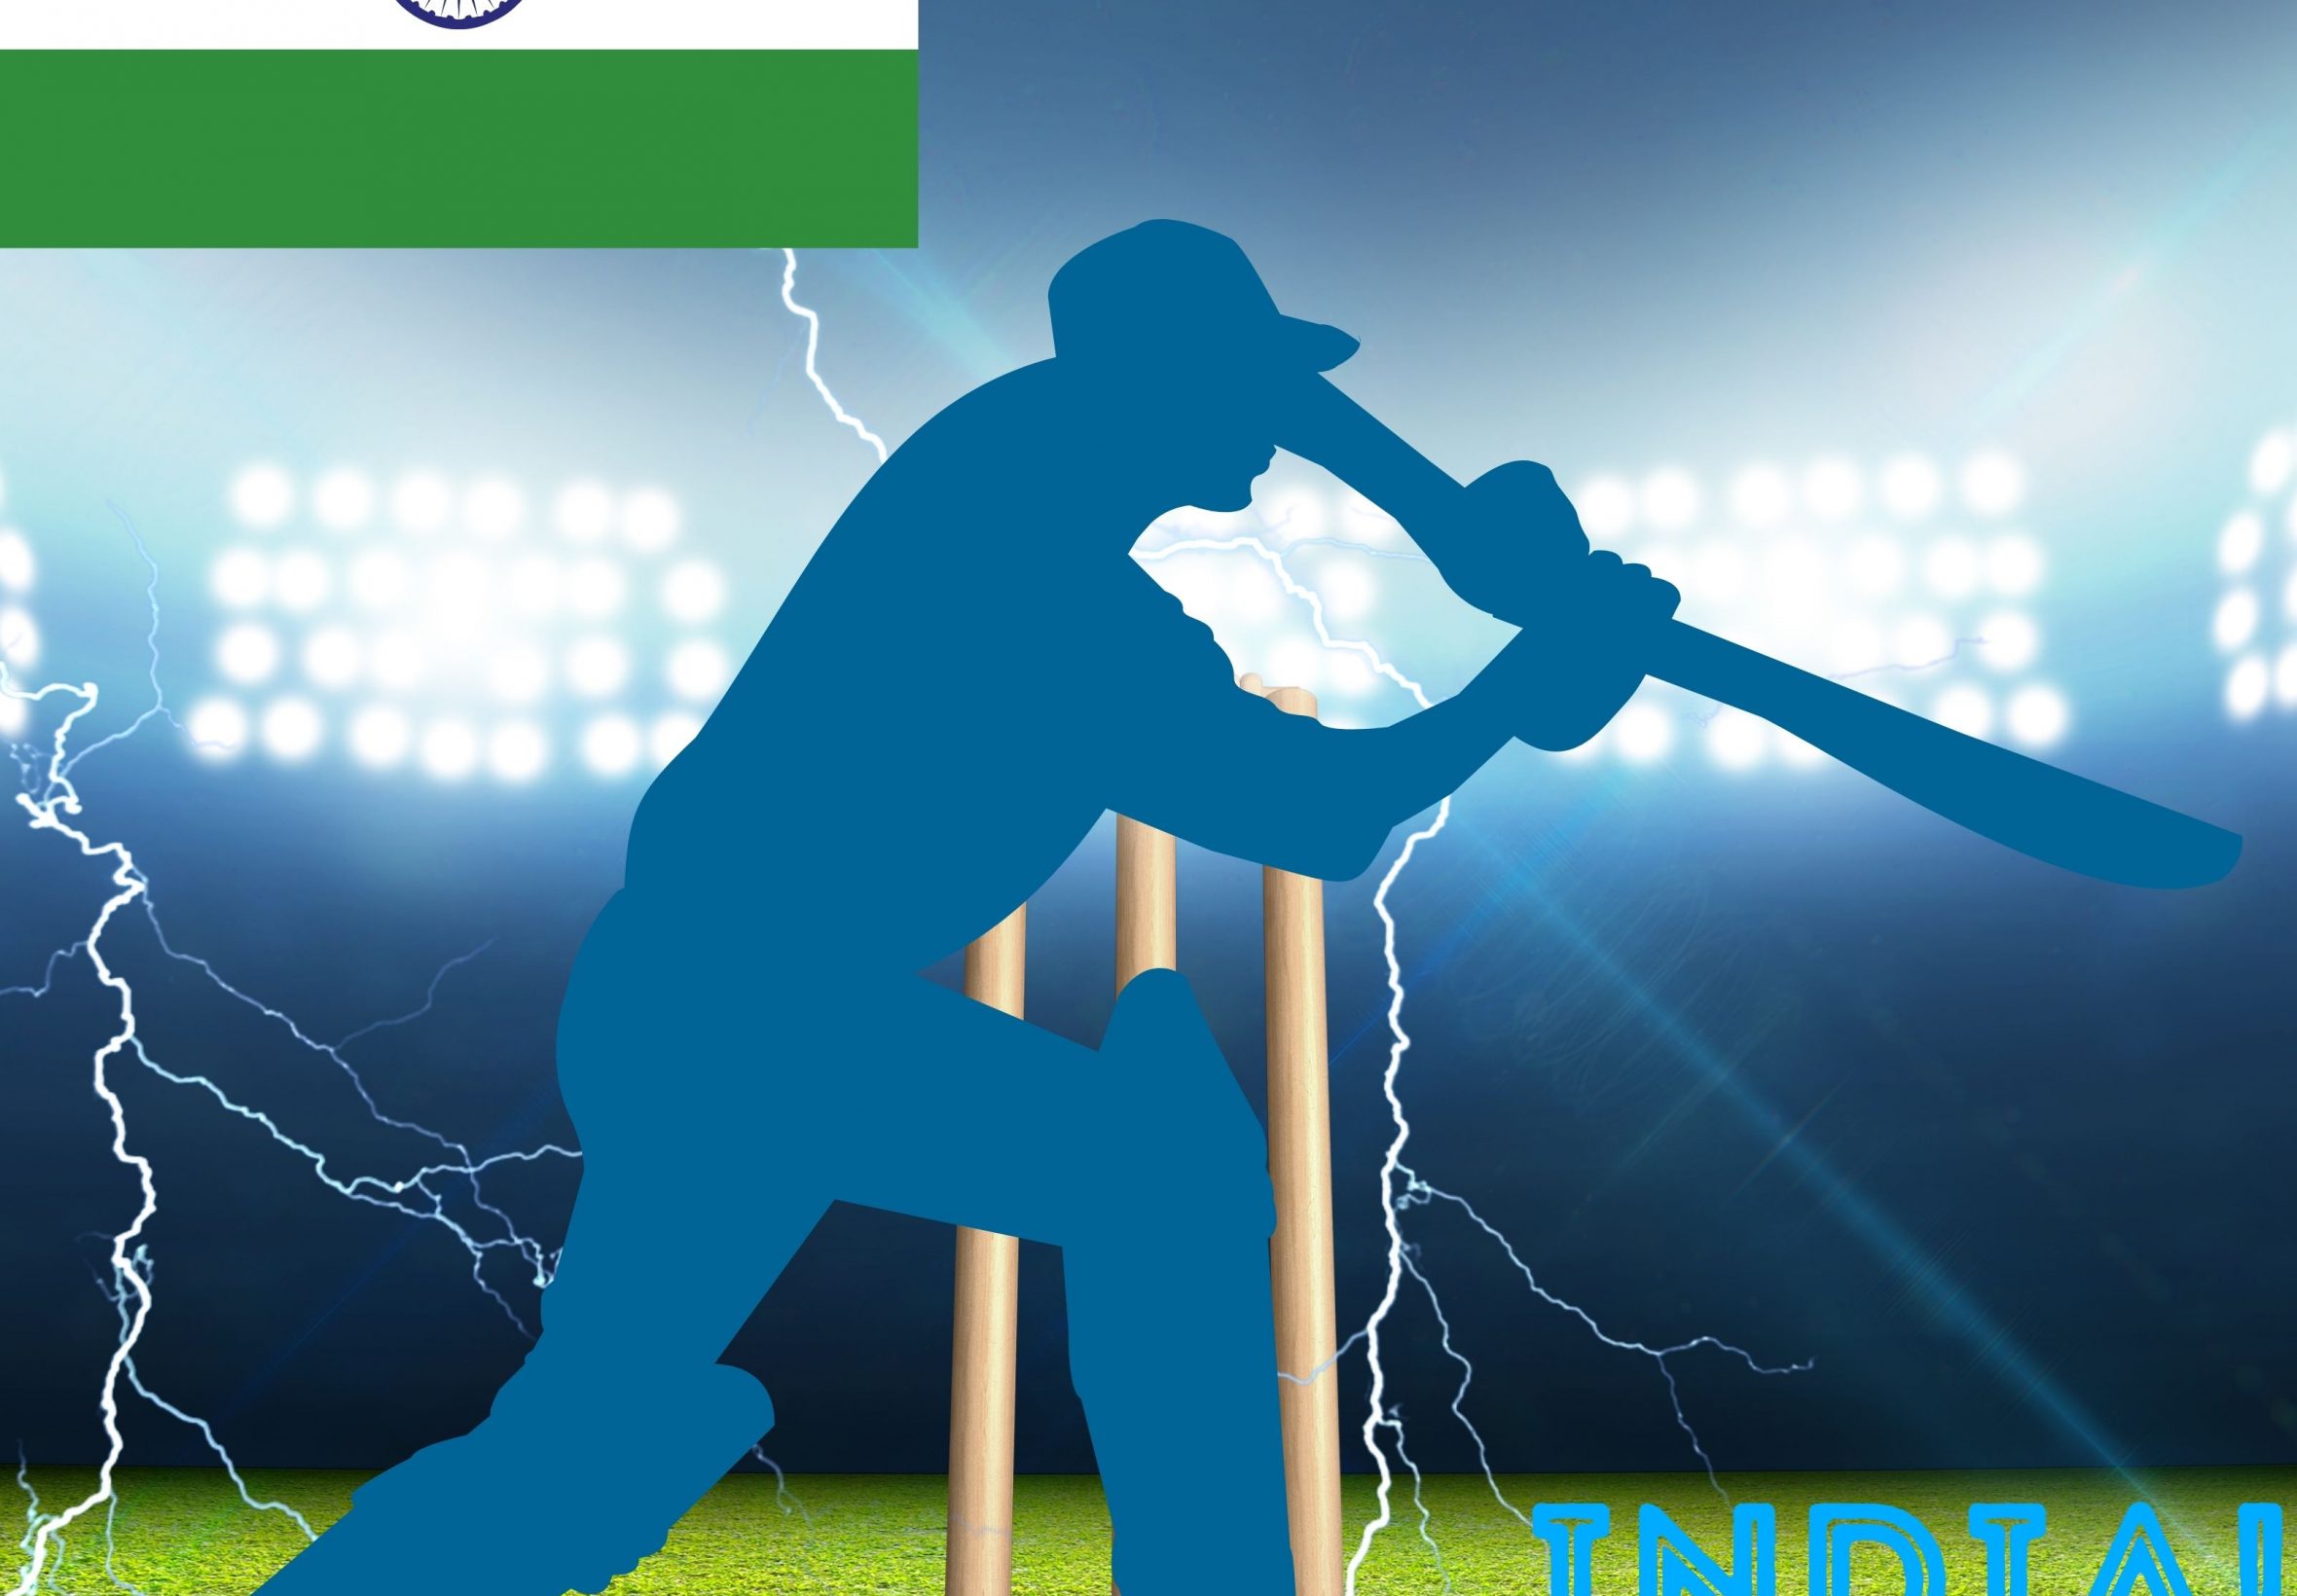 2360x1640 iPad Air wallpaper 4k India Cricket Stadium iPad Wallpaper 2360x1640 pixels resolution